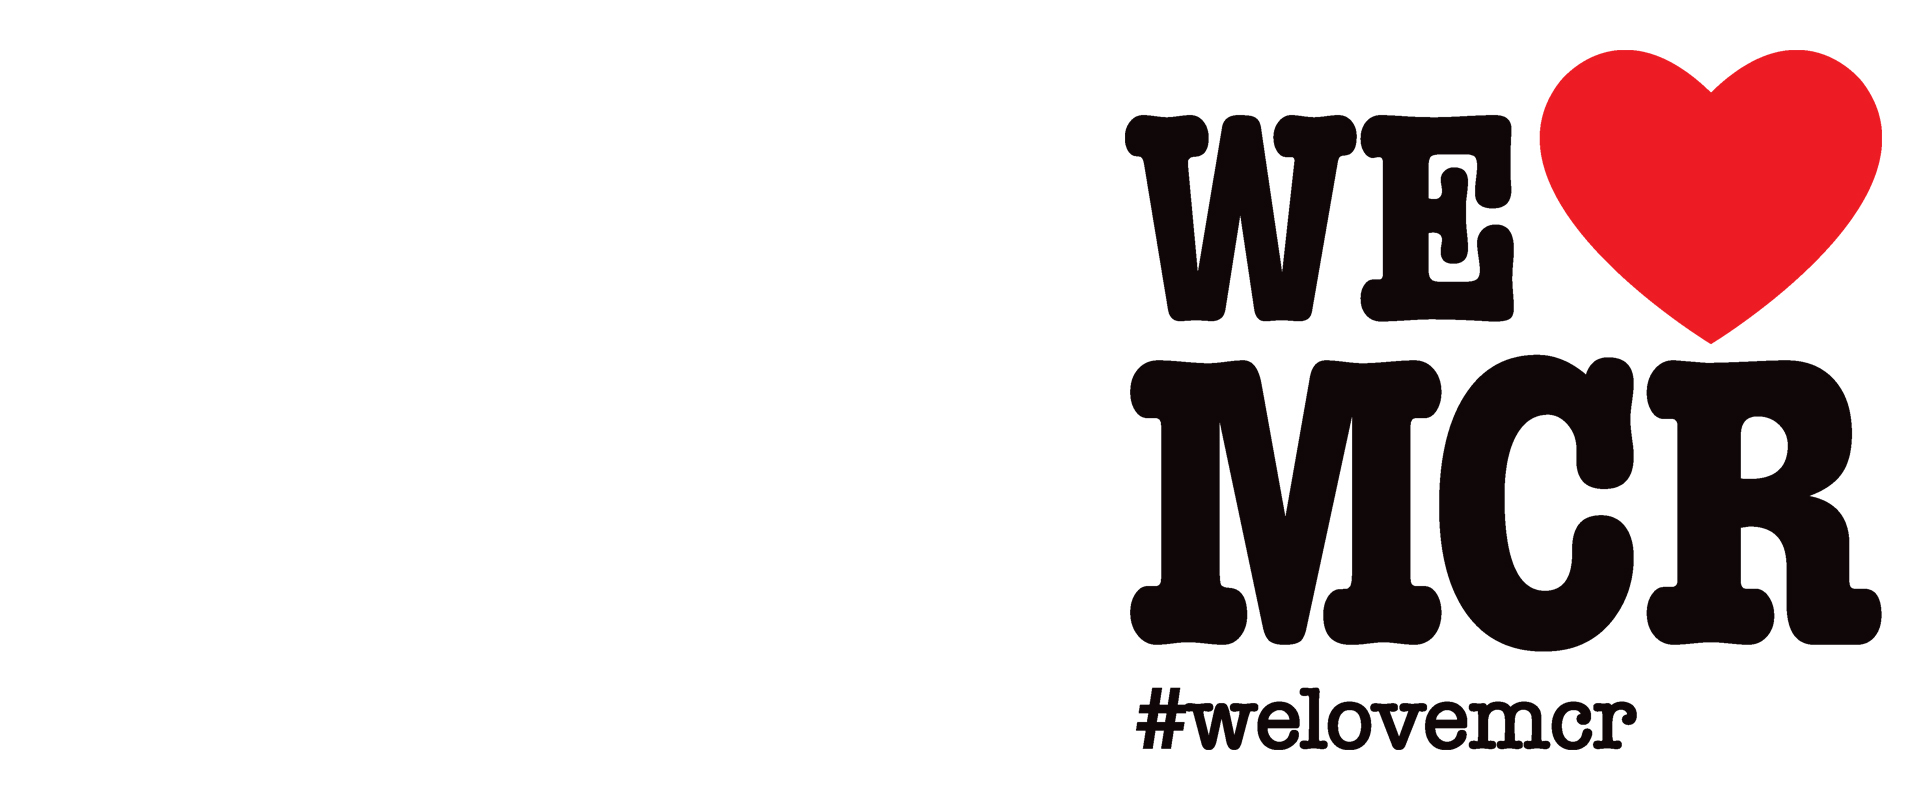 The #weloveManchester logo